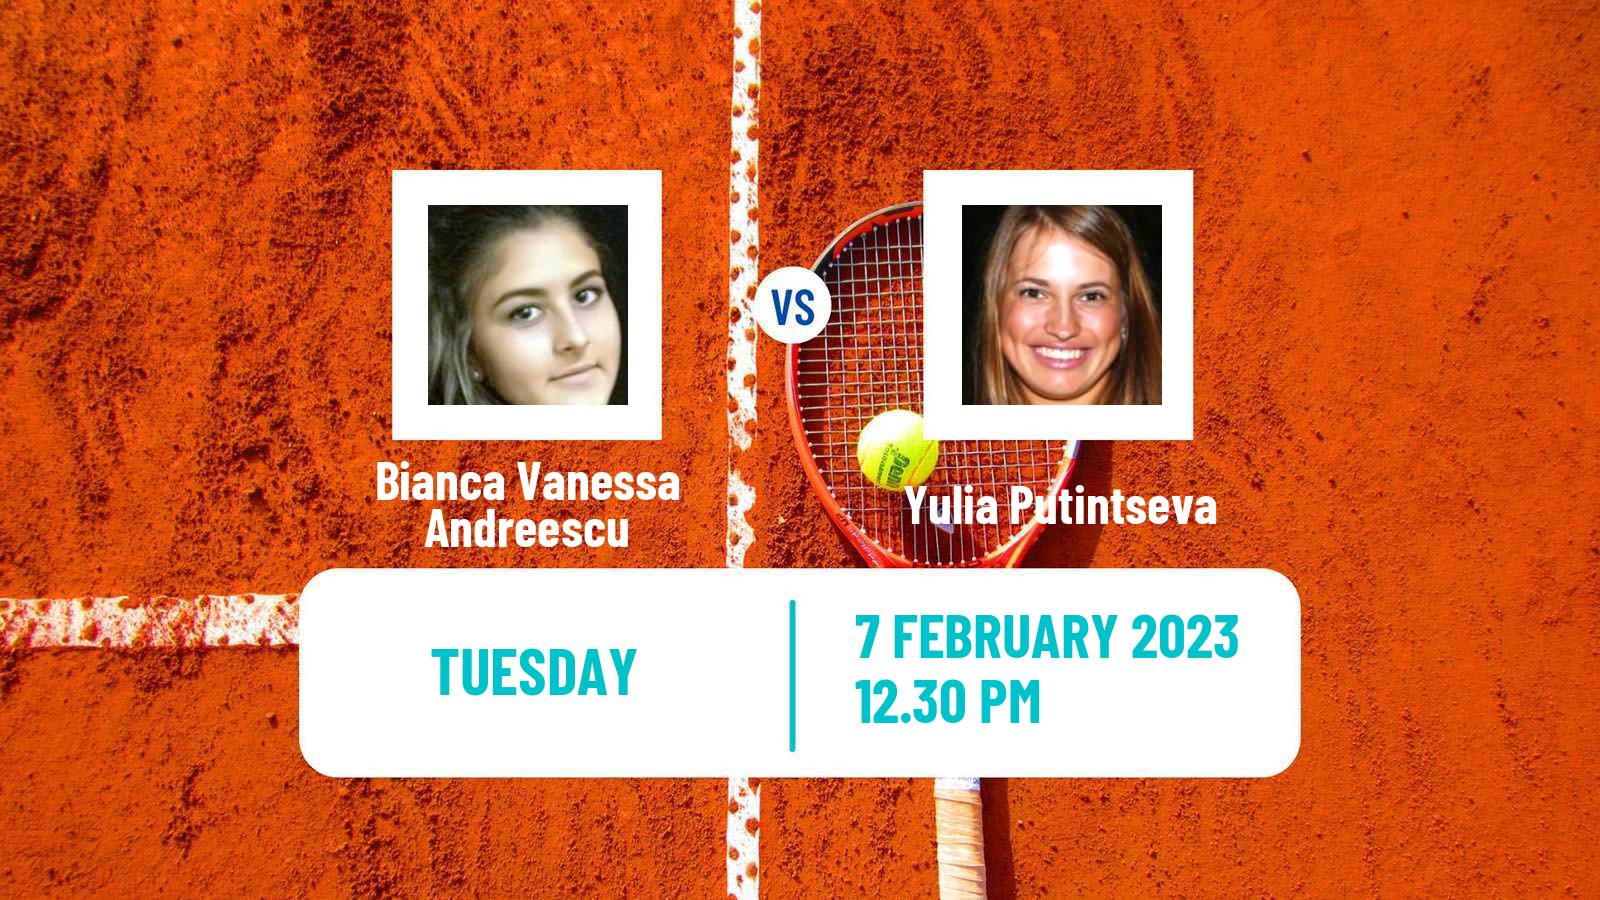 Tennis WTA Abu Dhabi Bianca Vanessa Andreescu - Yulia Putintseva